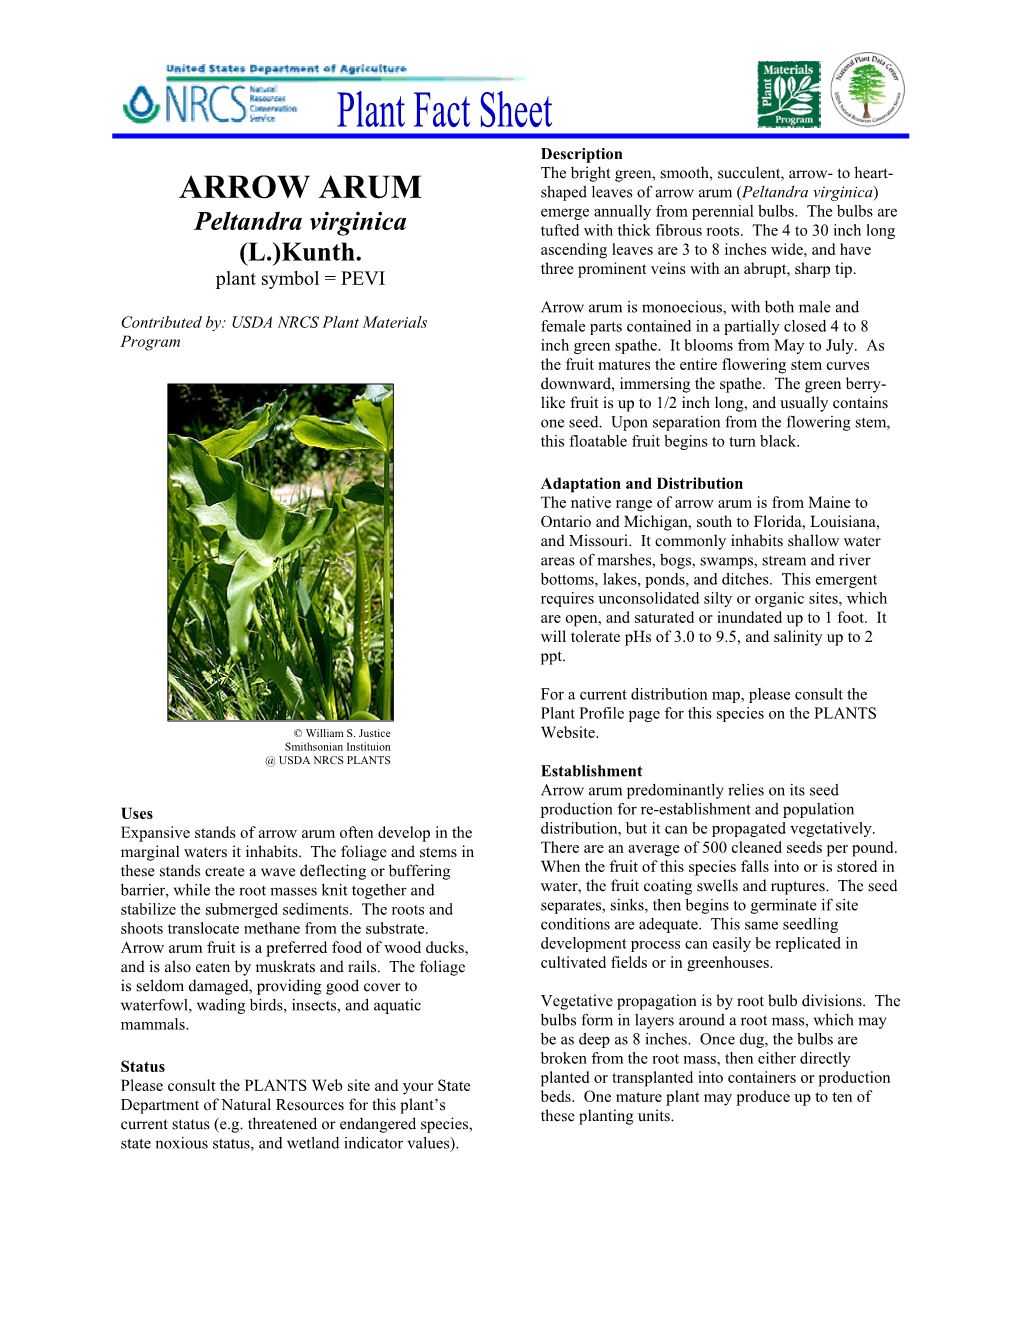 ARROW ARUM Shaped Leaves of Arrow Arum (Peltandra Virginica) Emerge Annually from Perennial Bulbs